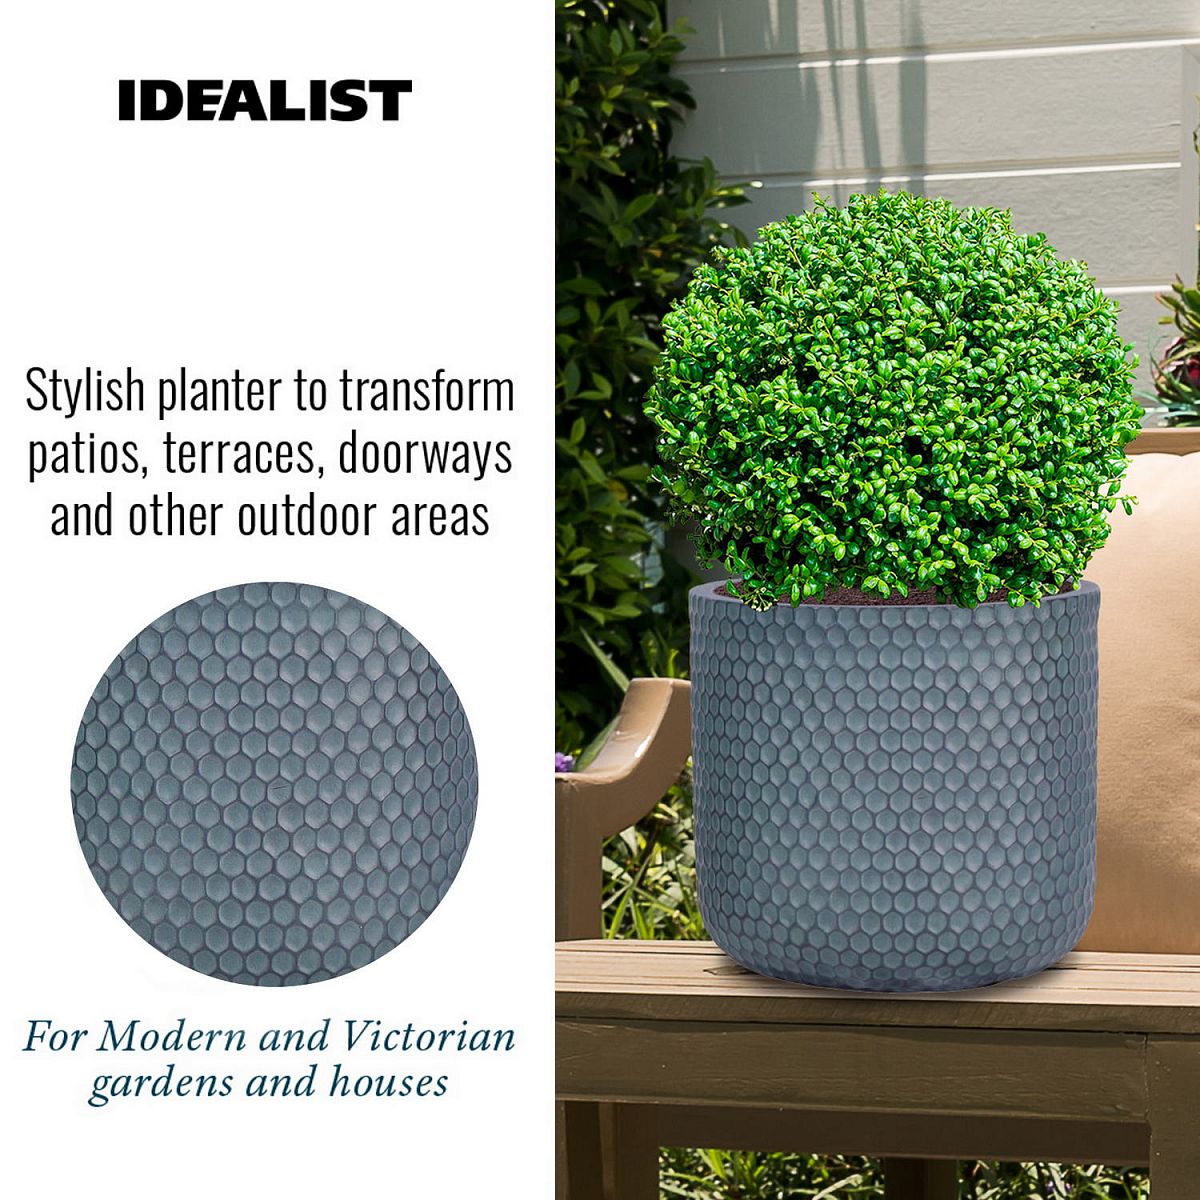 Honeycomb Style Cylinder Round Outdoor Planter by Idealist Lite